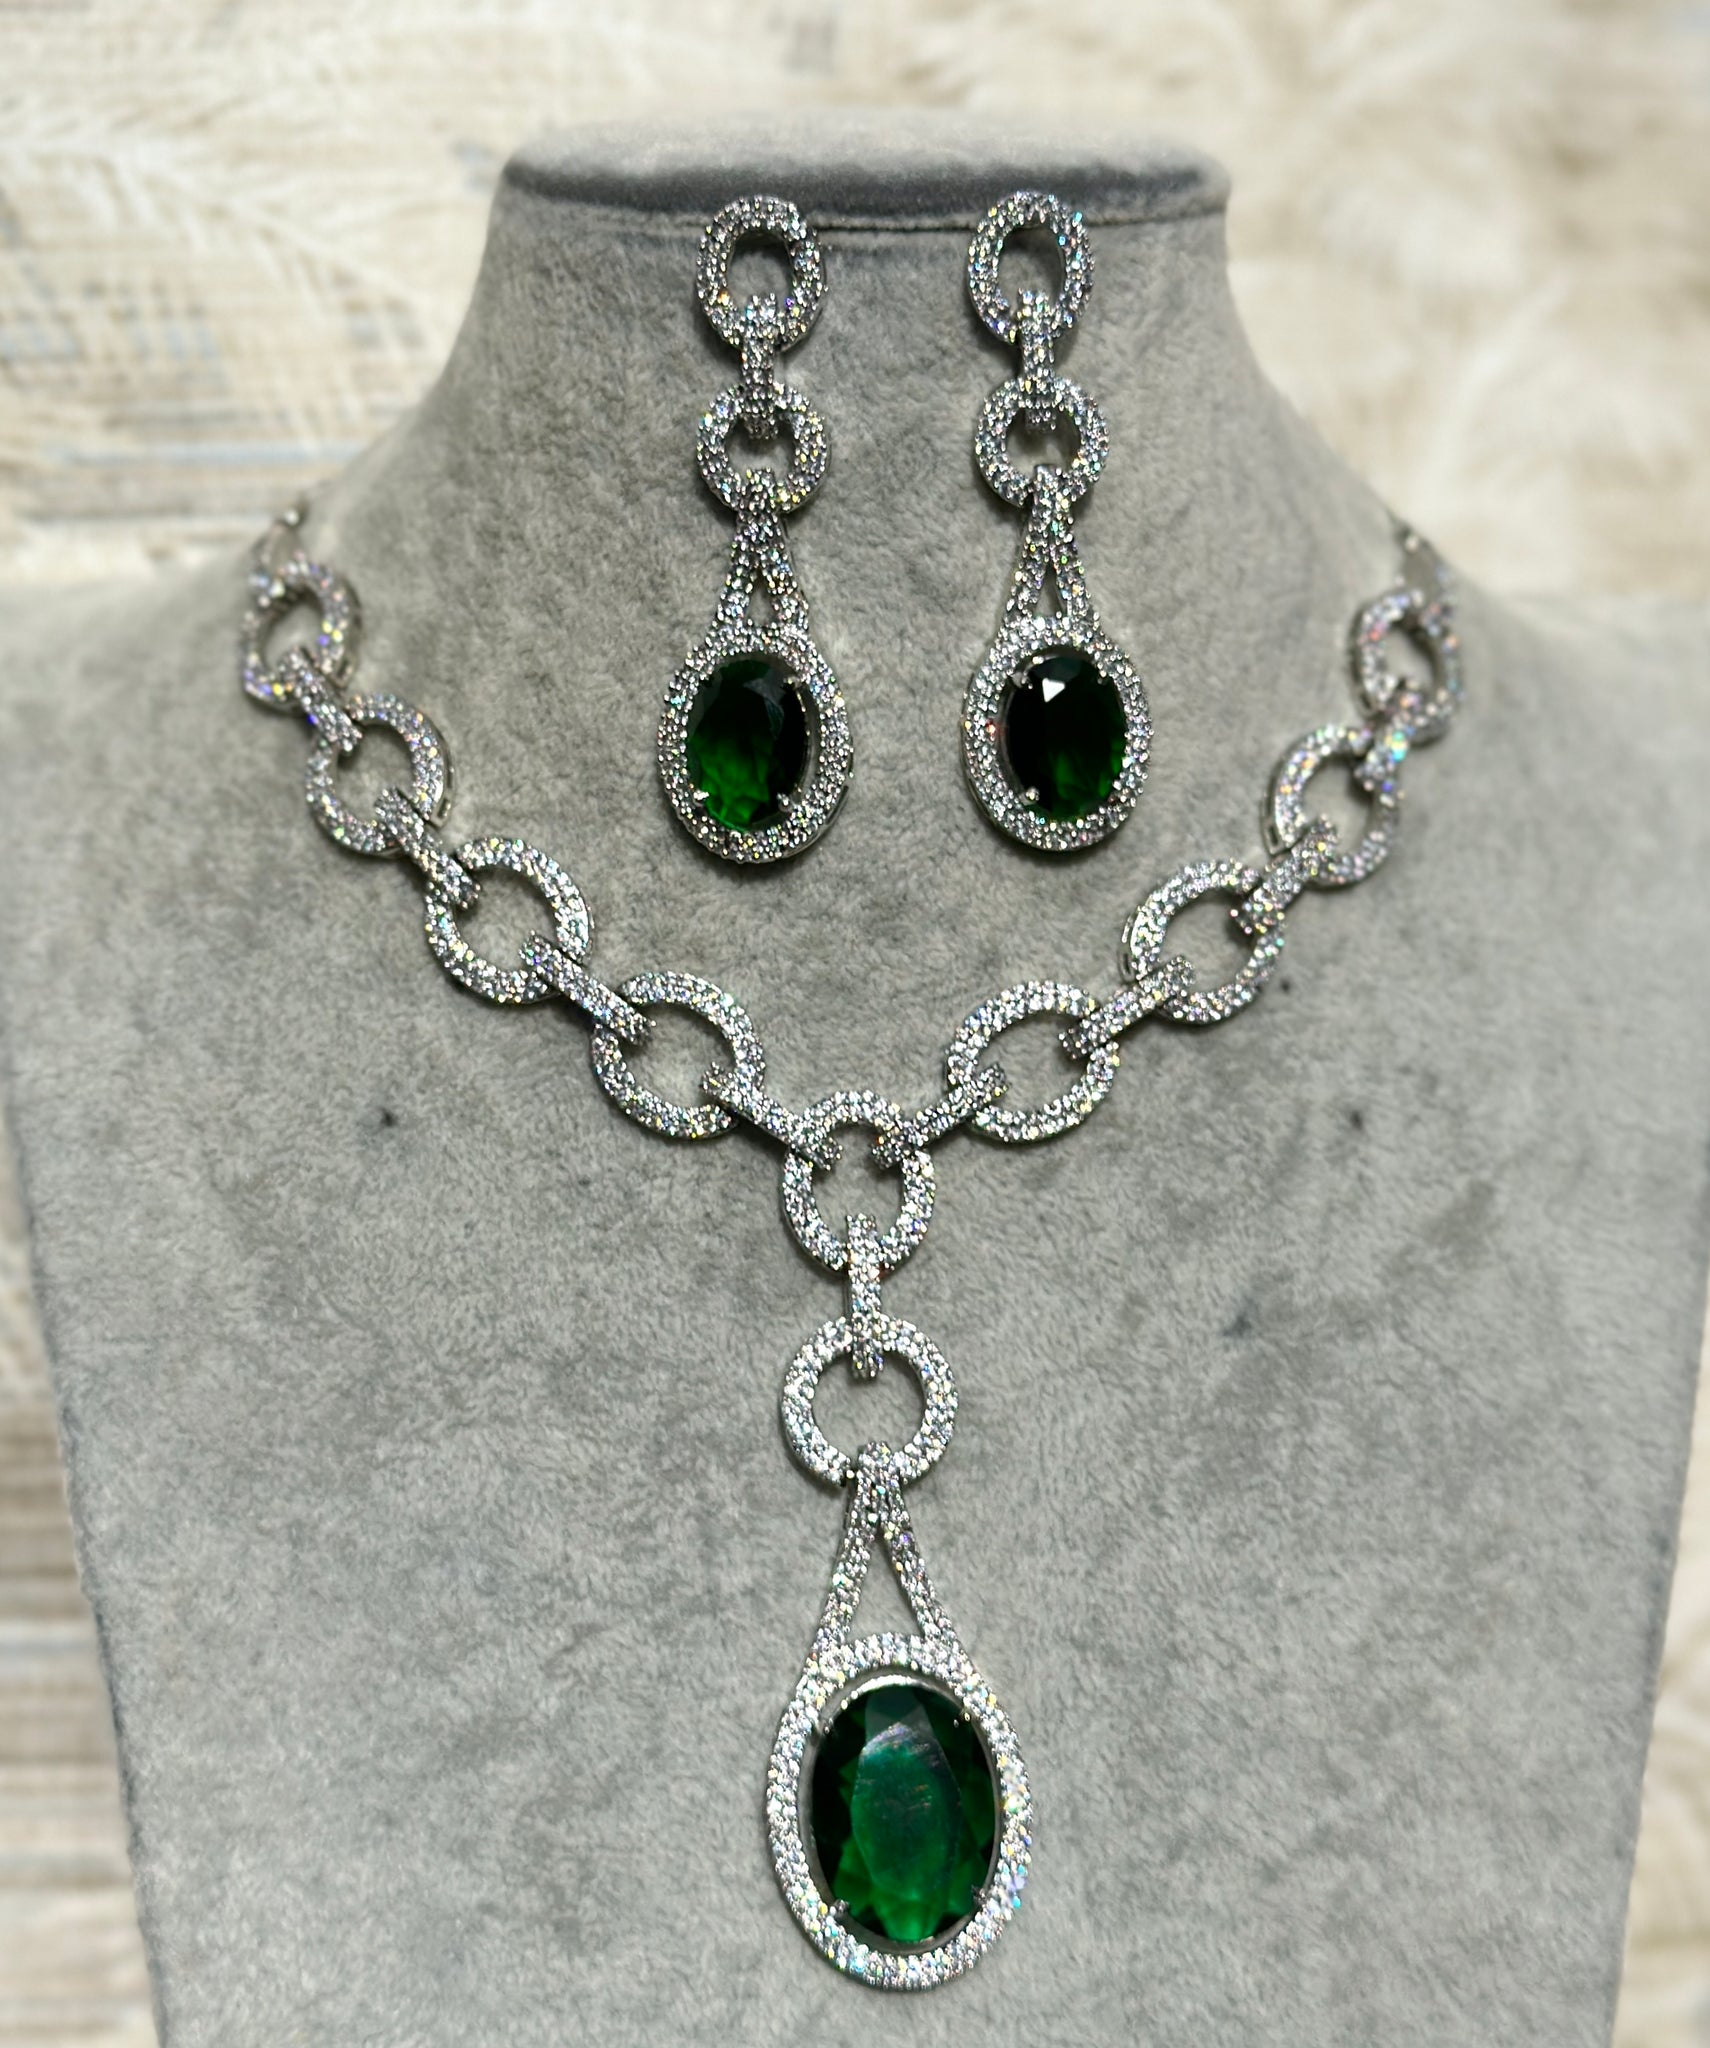 Diamondesque Chain Links Emerald Oval Pendant Necklace & Earrings Set